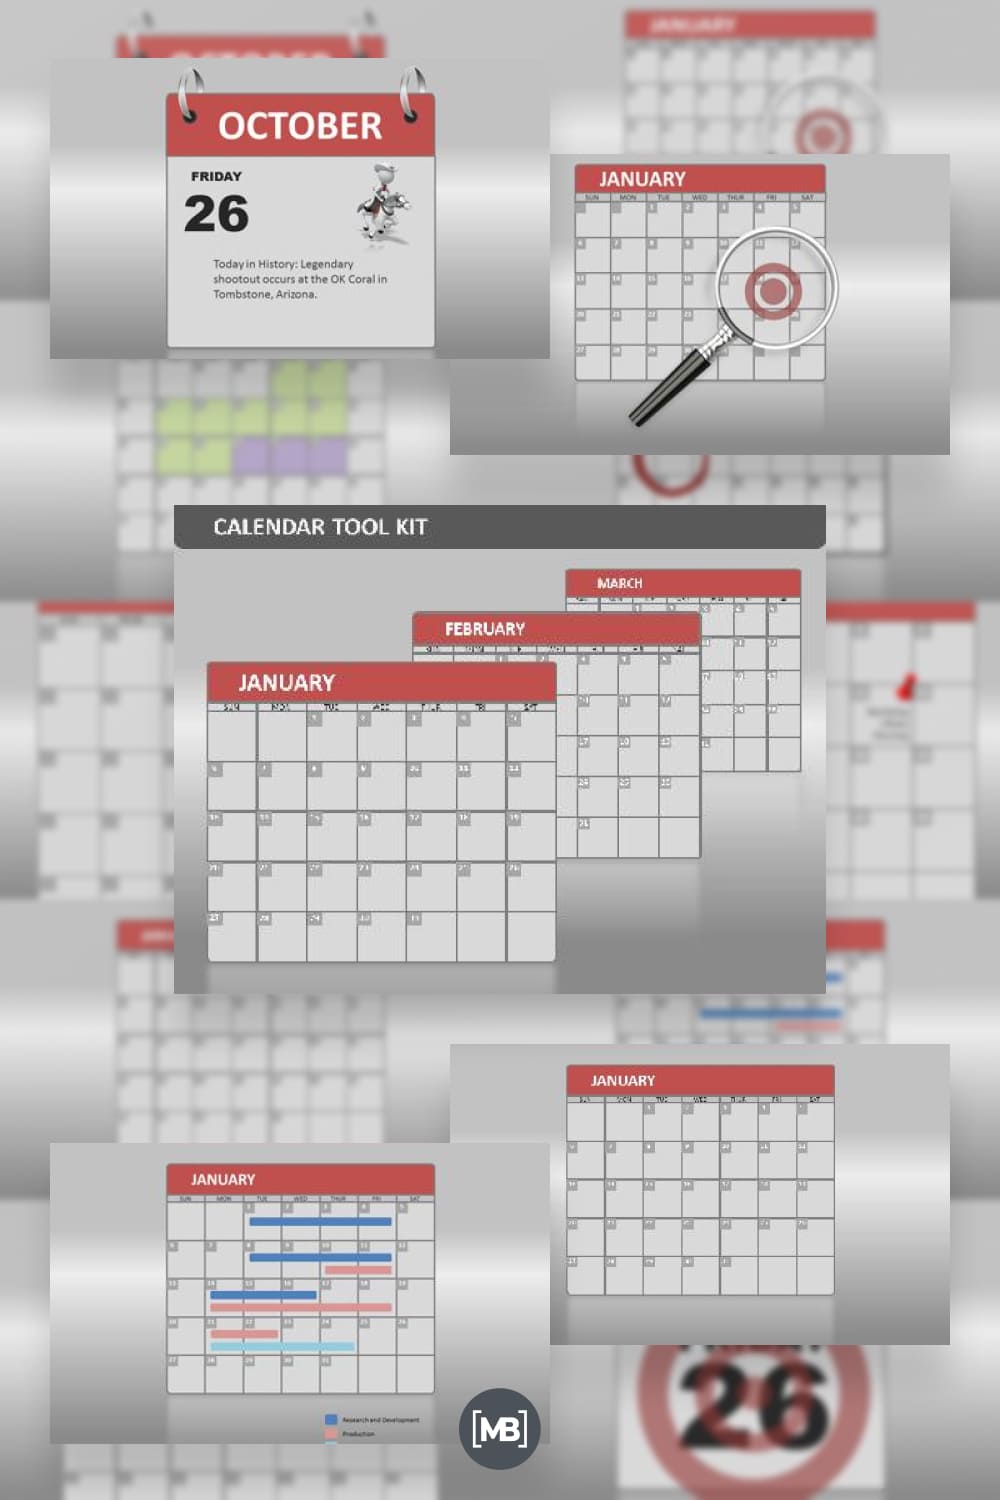 Powerpoint calendar tool kit.